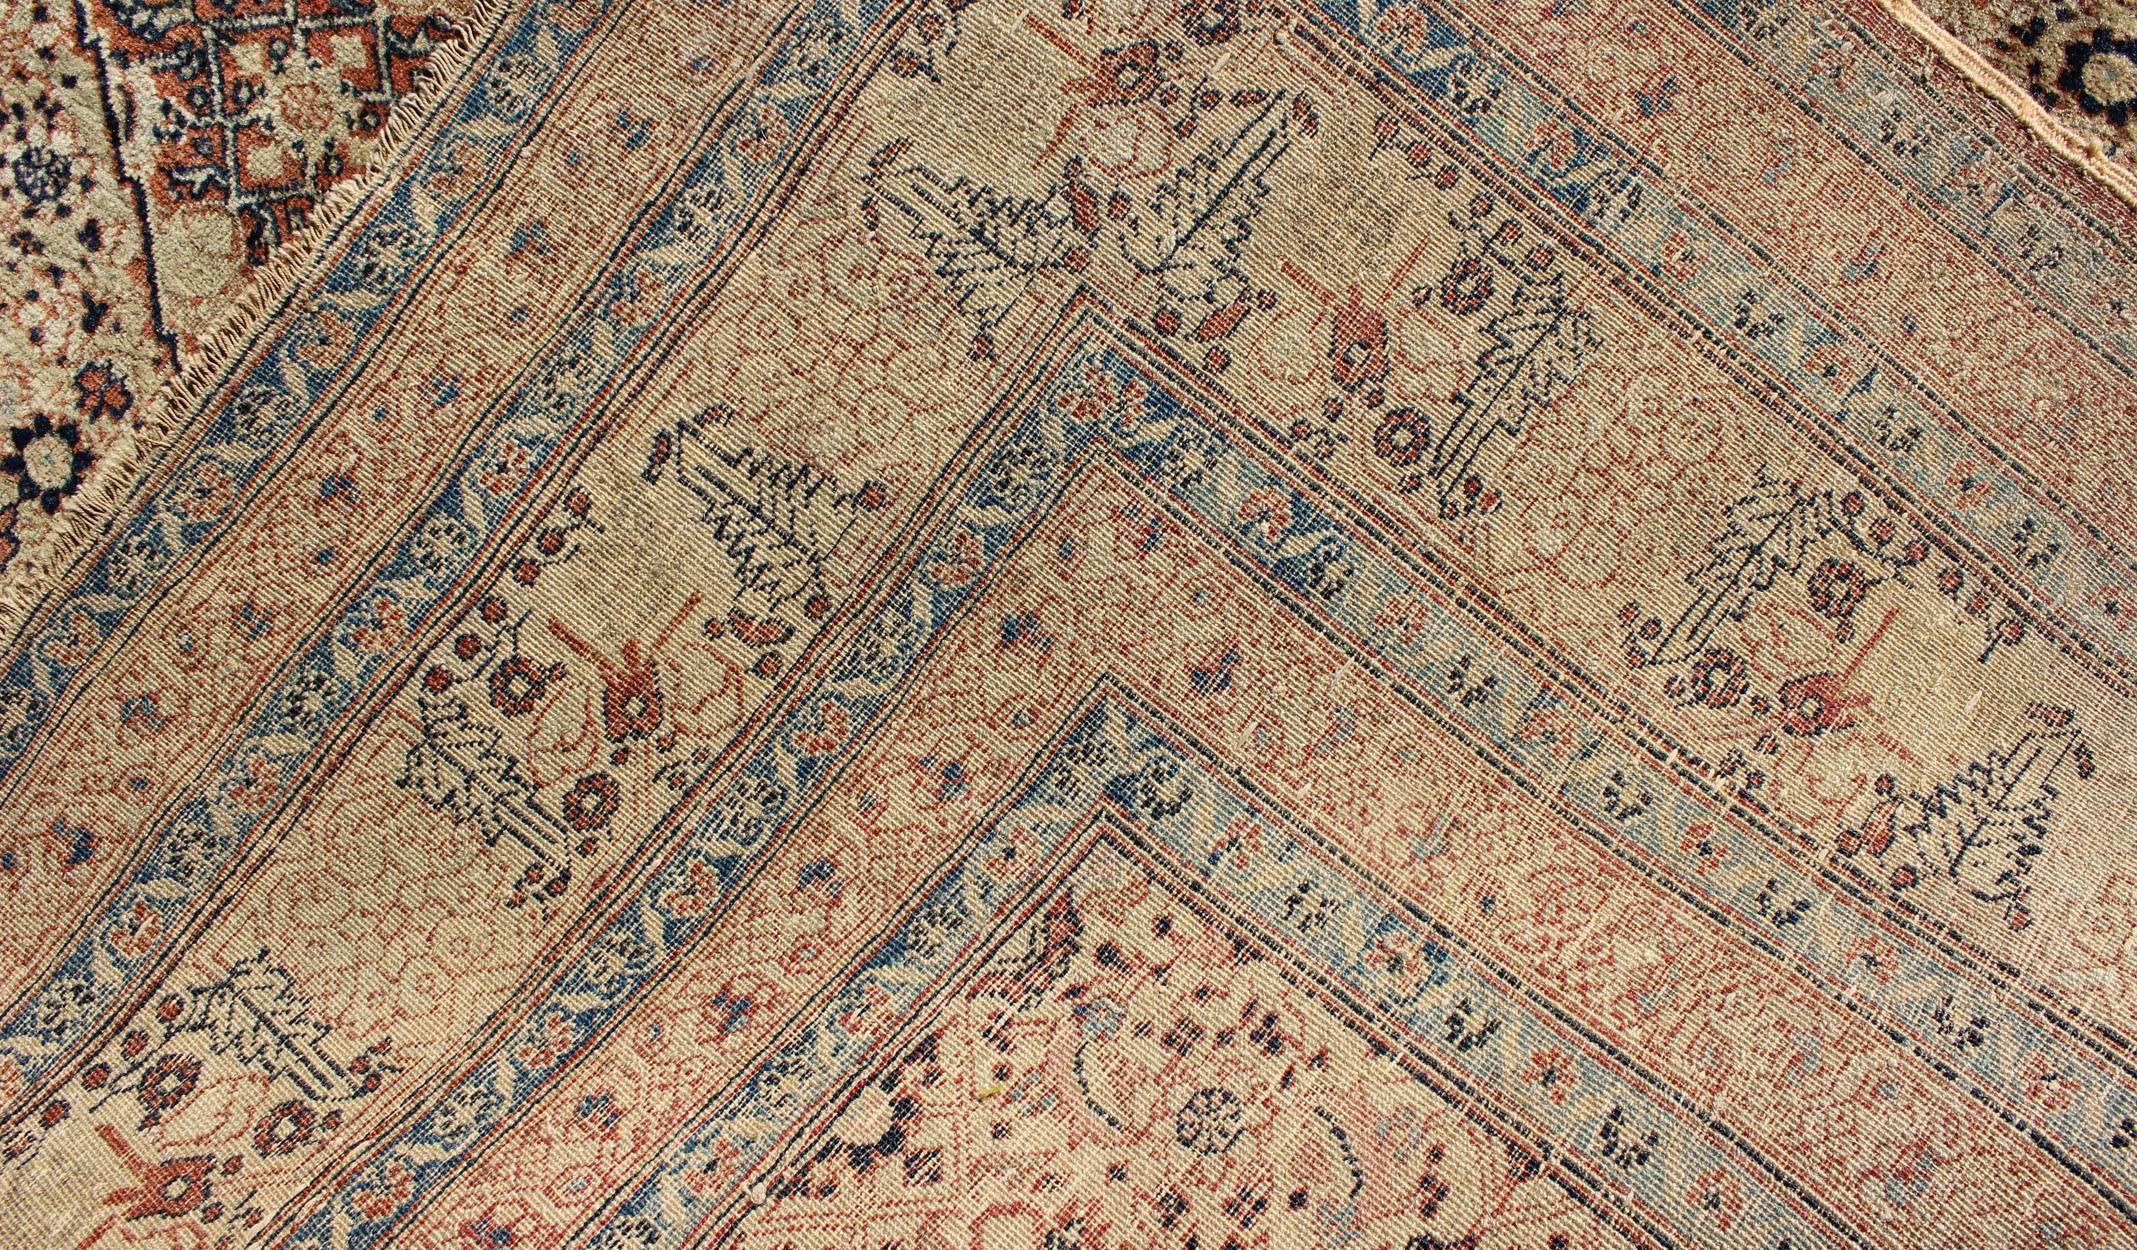 Antique Persian Tabriz Haj Jalili Fine Rug in Earth tones, Red Brown Background For Sale 1